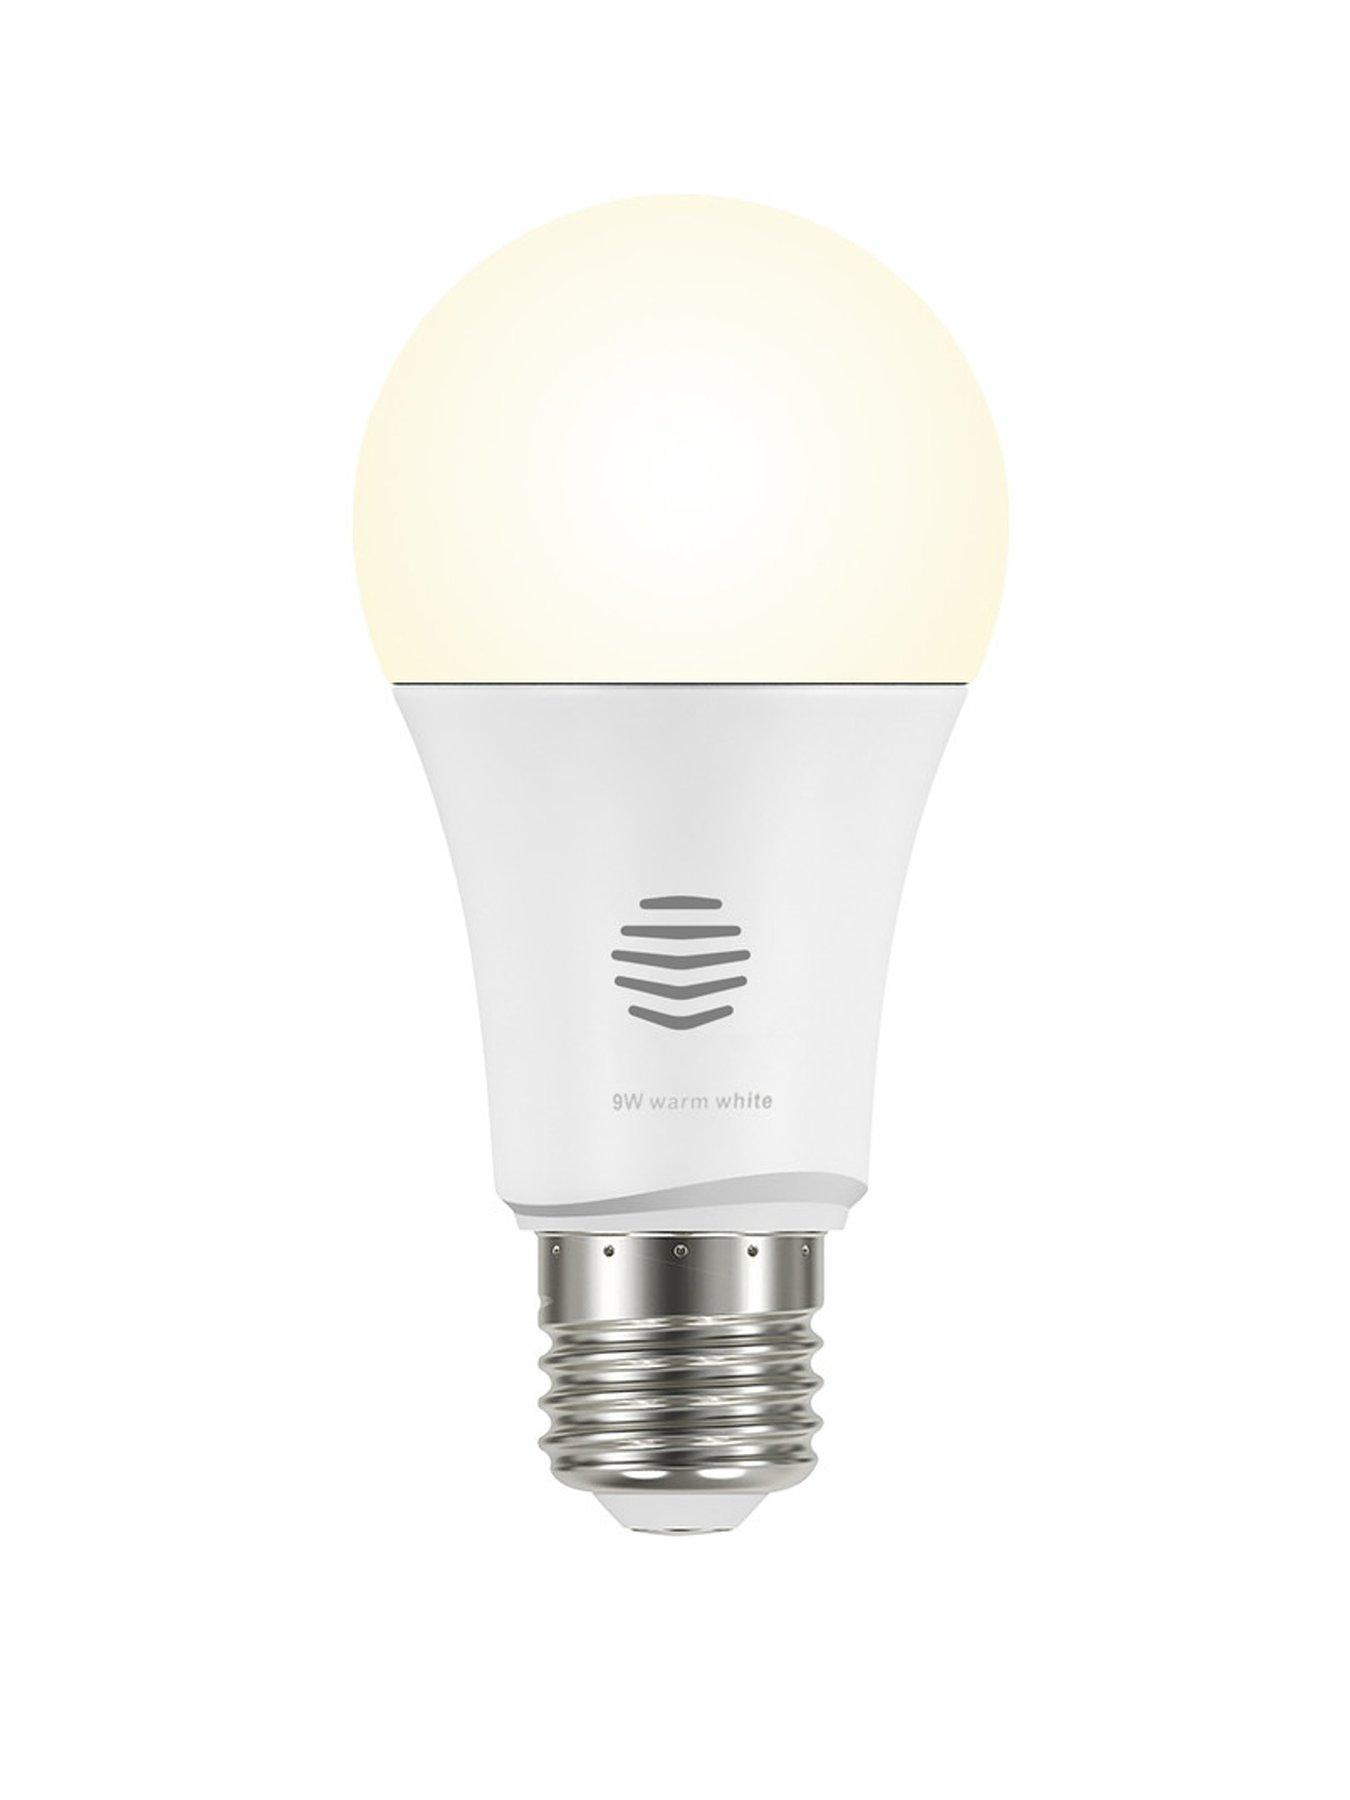 GU10 Smart Light Bulb, Hive Home